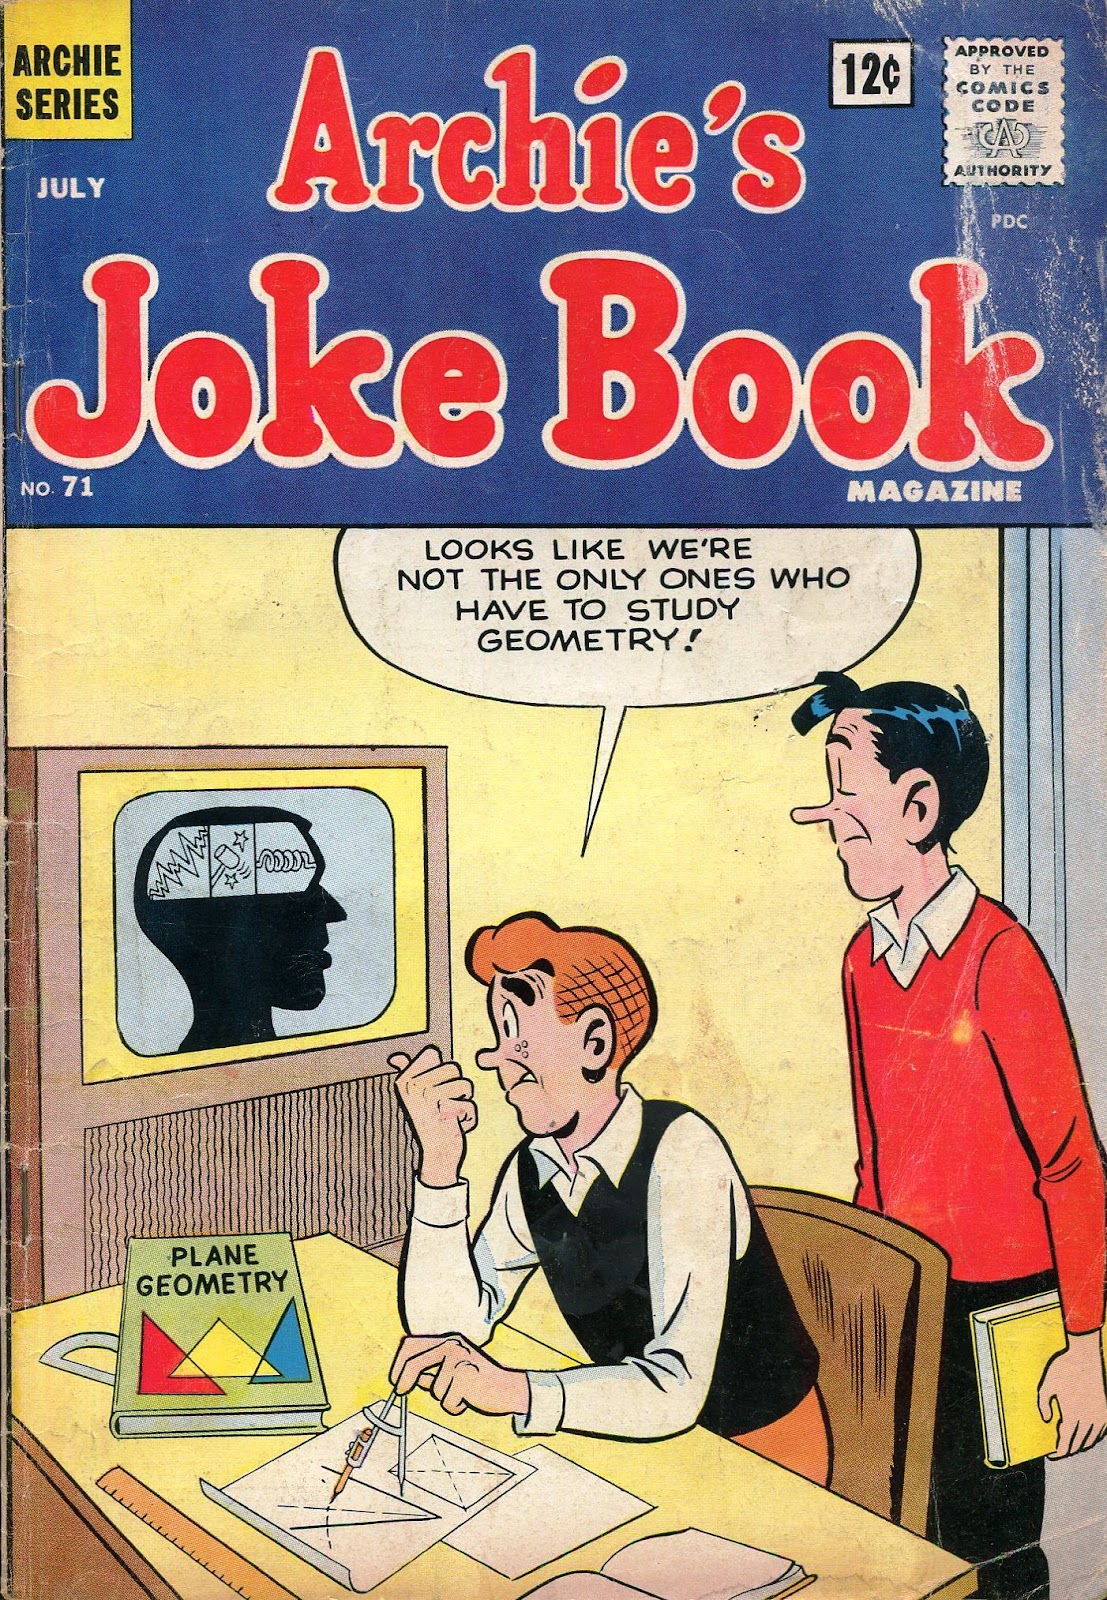 Archie's Joke Book Magazine issue 71 - Page 1